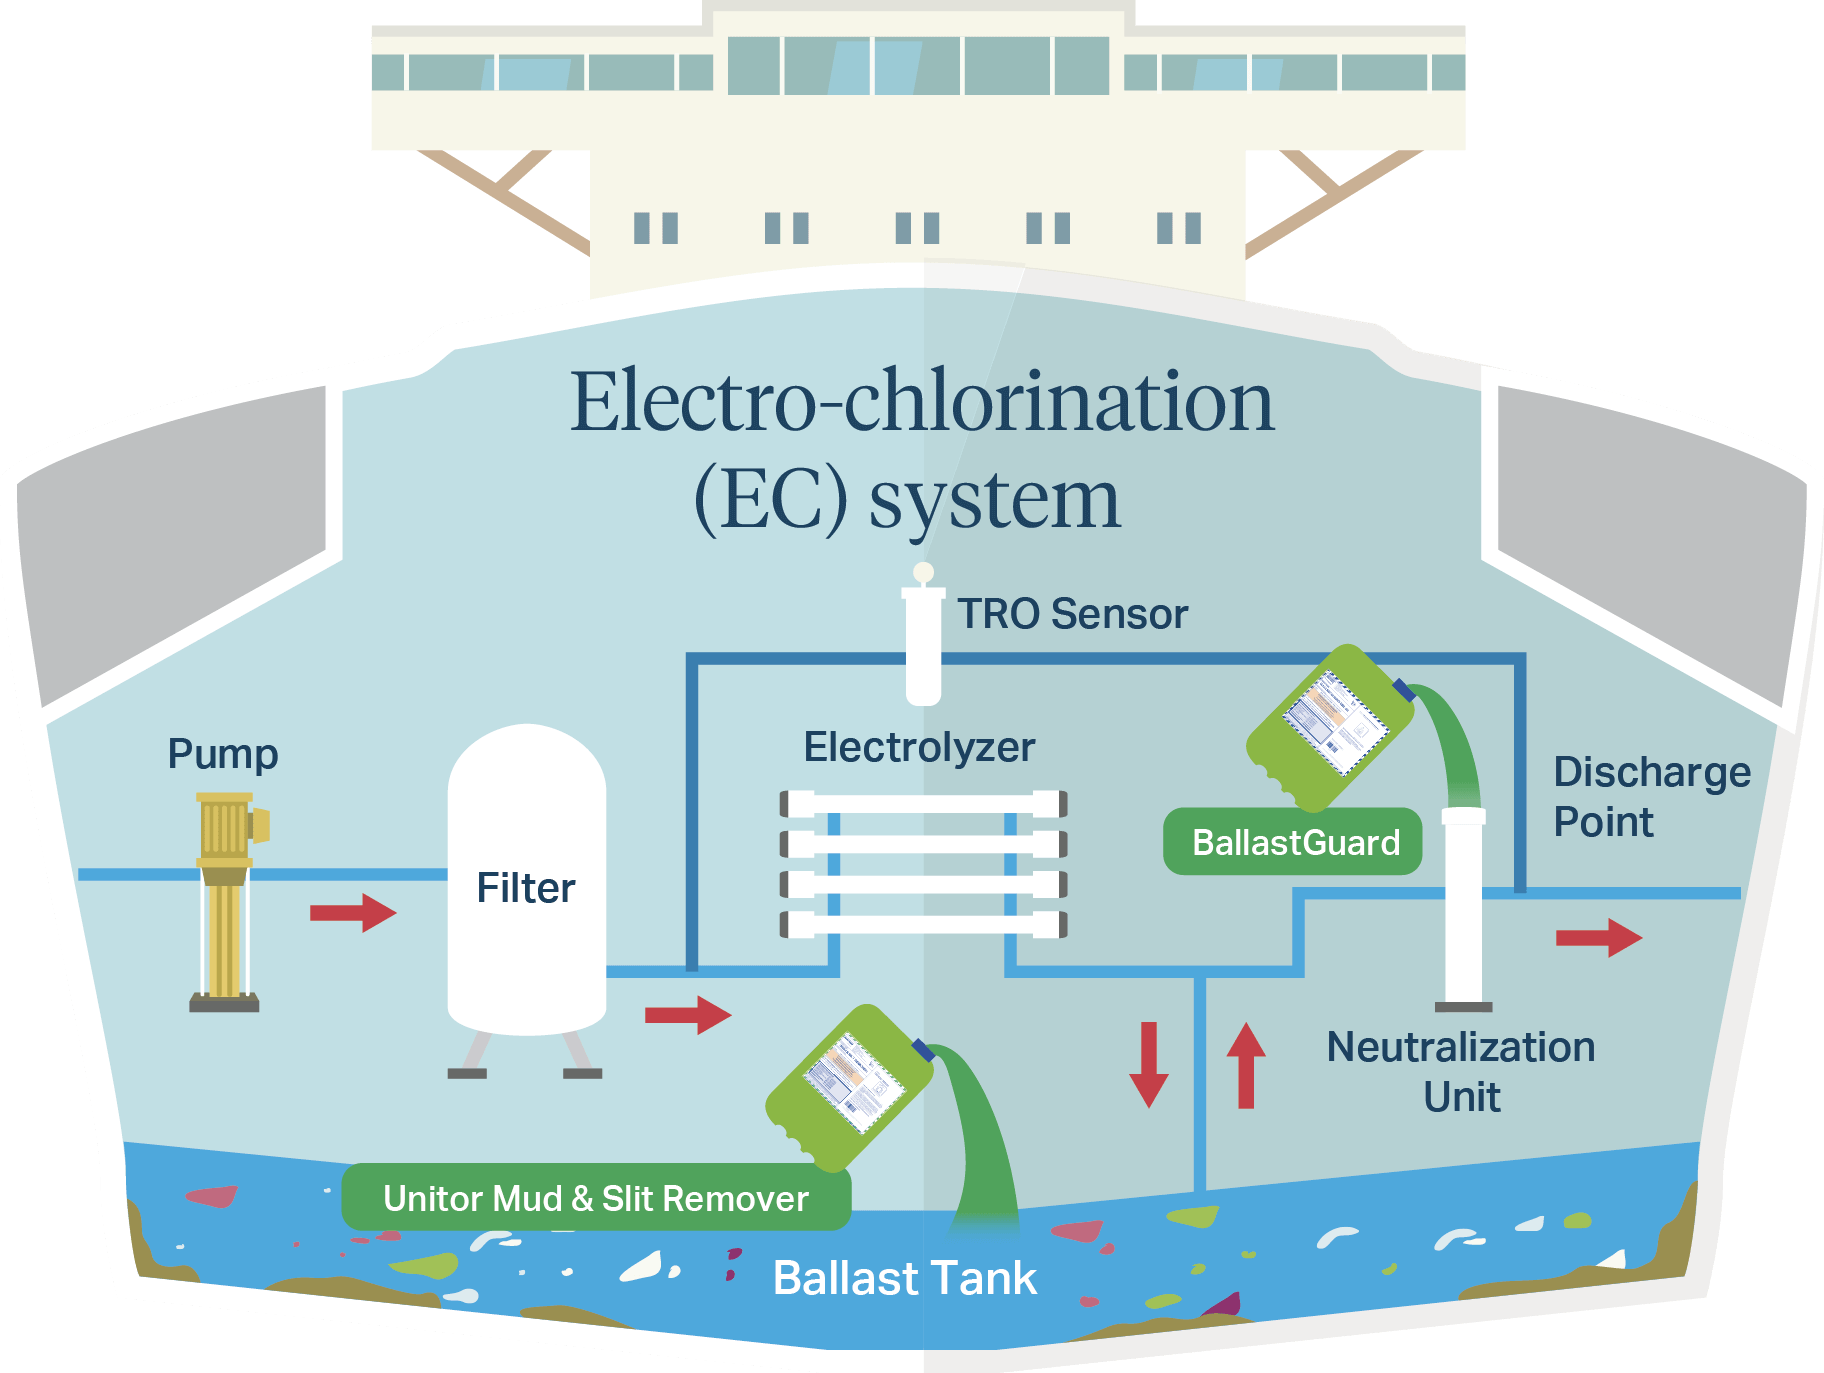 Electro-chlorination (EC) system